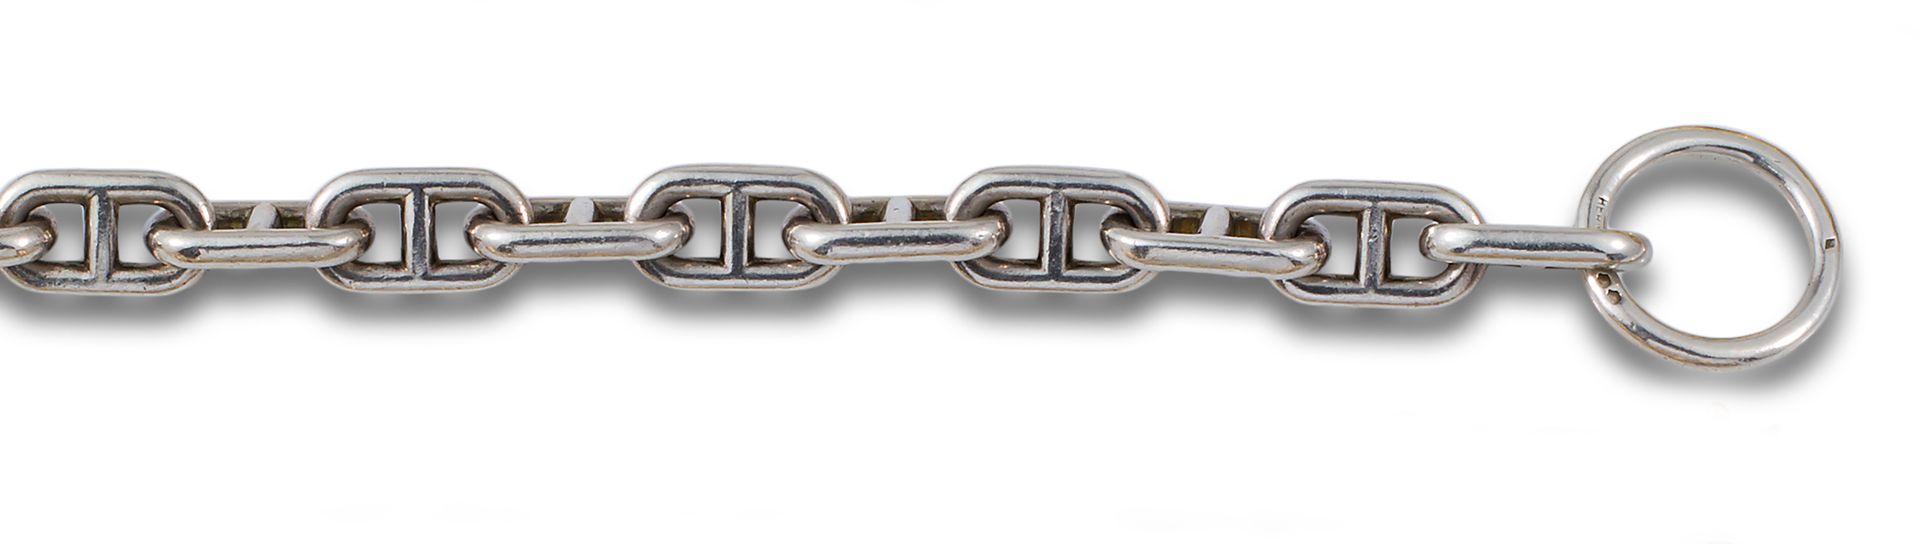 SILVER BRACELET SIGNED HERMÉS Bracciale in argento firmato HERMES, modello "Chaî&hellip;